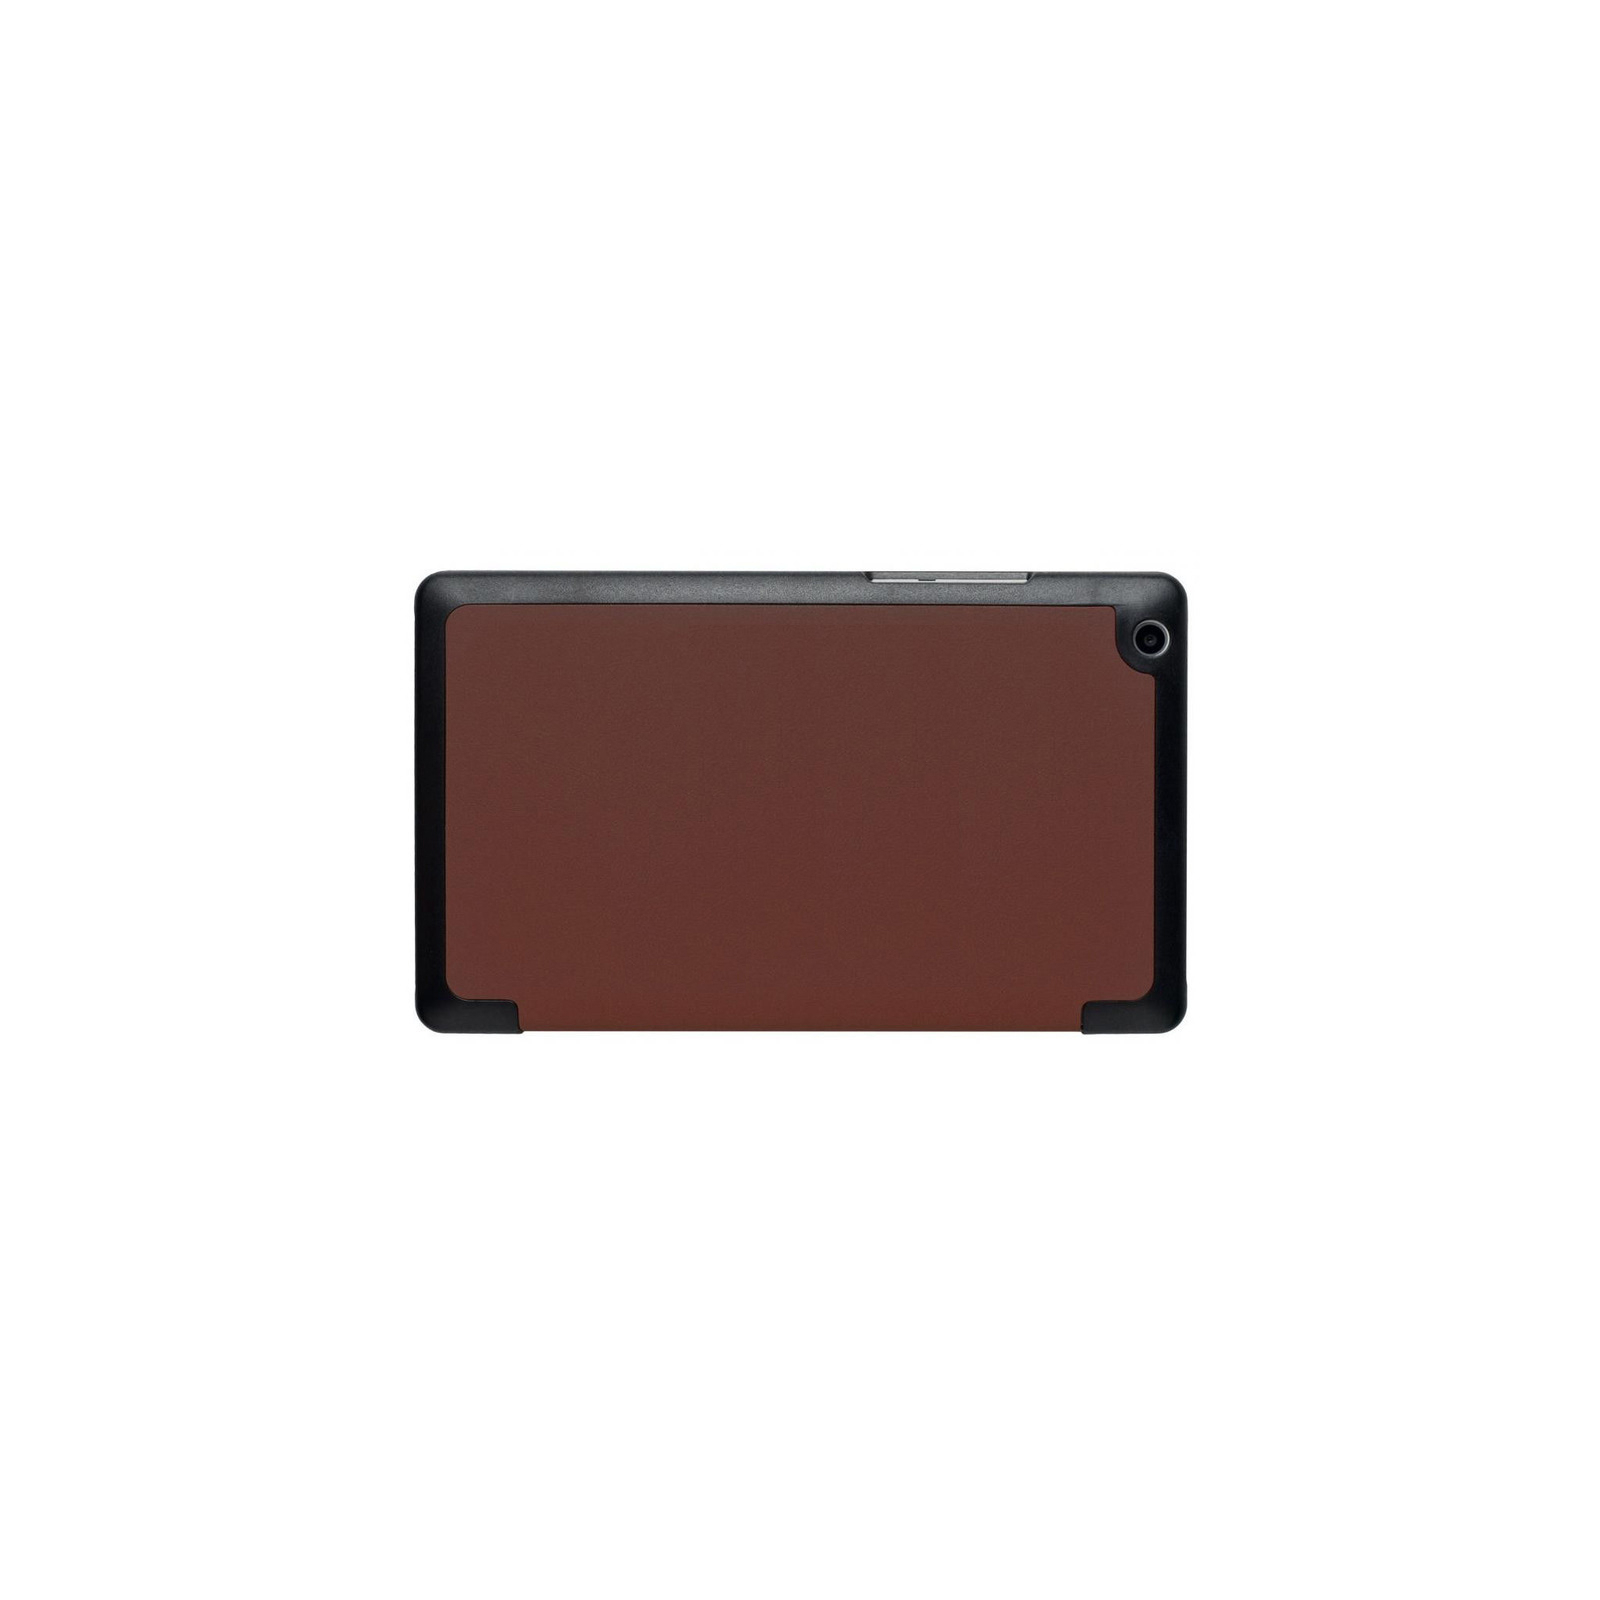 Чехол для планшета Grand-X для Lenovo Tab 3 710F Brown (LTC - LT3710FBR) изображение 2